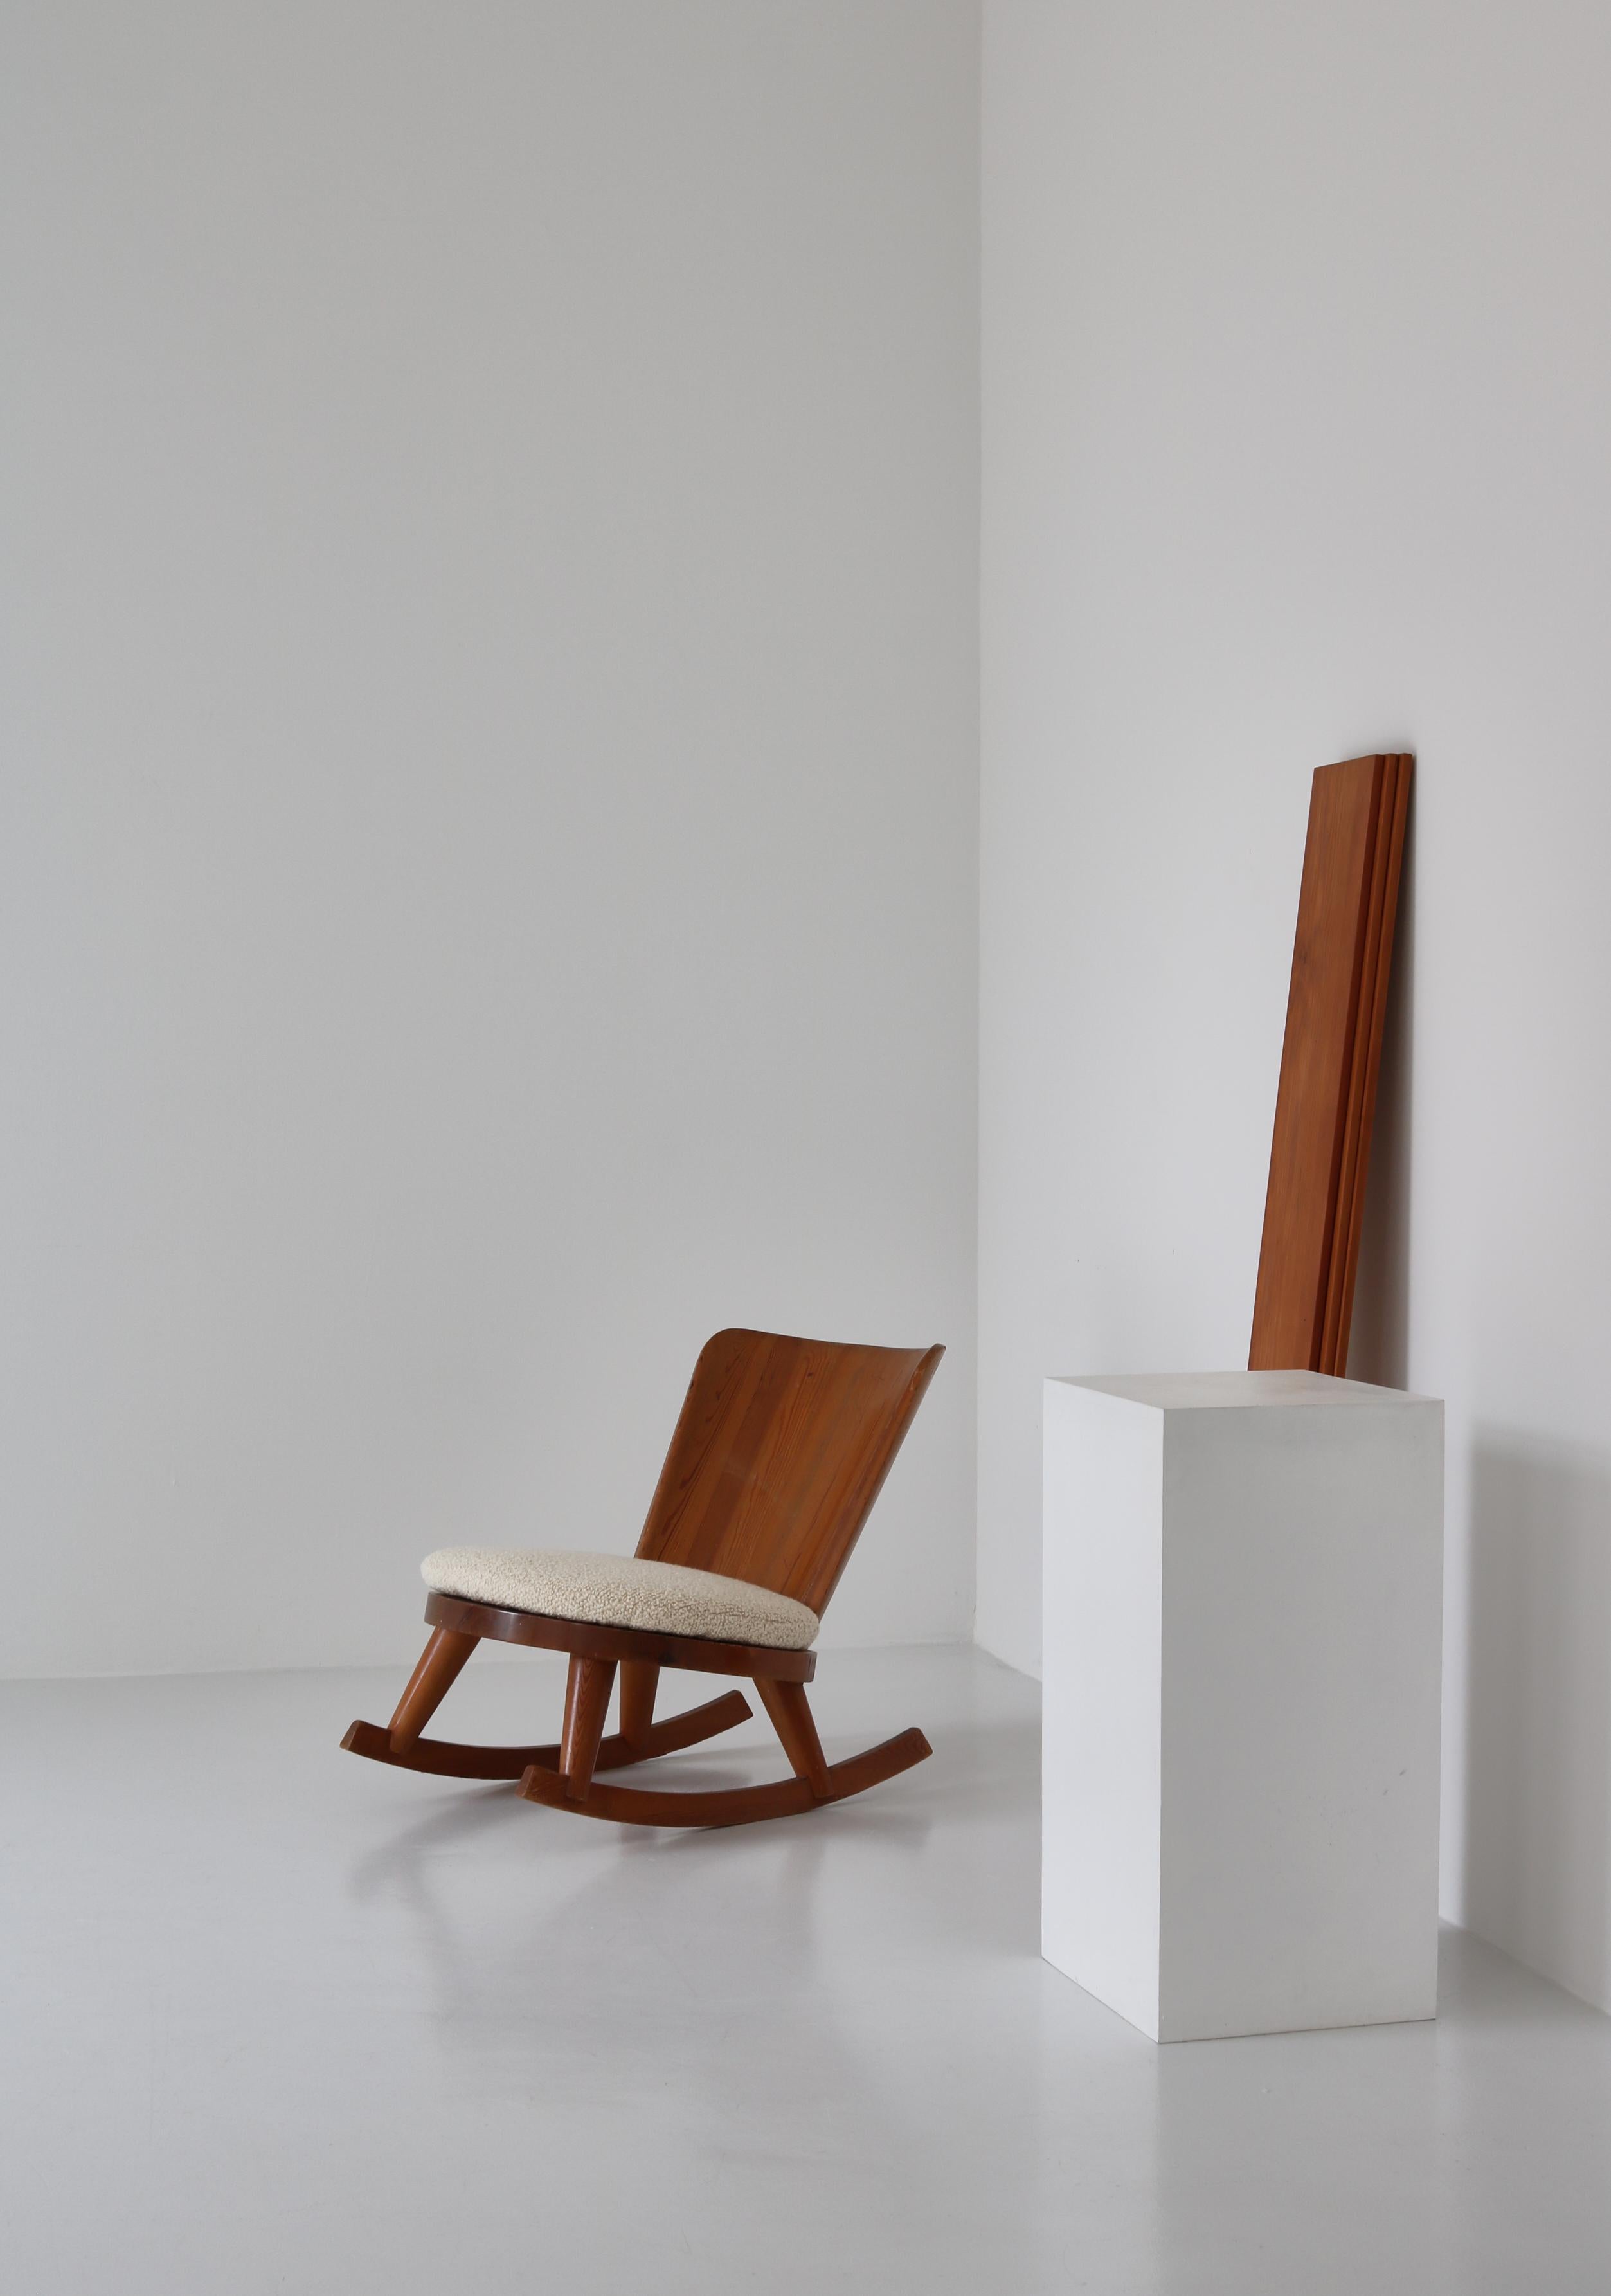 Rocking Chair in Pine by Torsten Claeson for Svensk Fur, Swedish Modern, 1930s For Sale 8